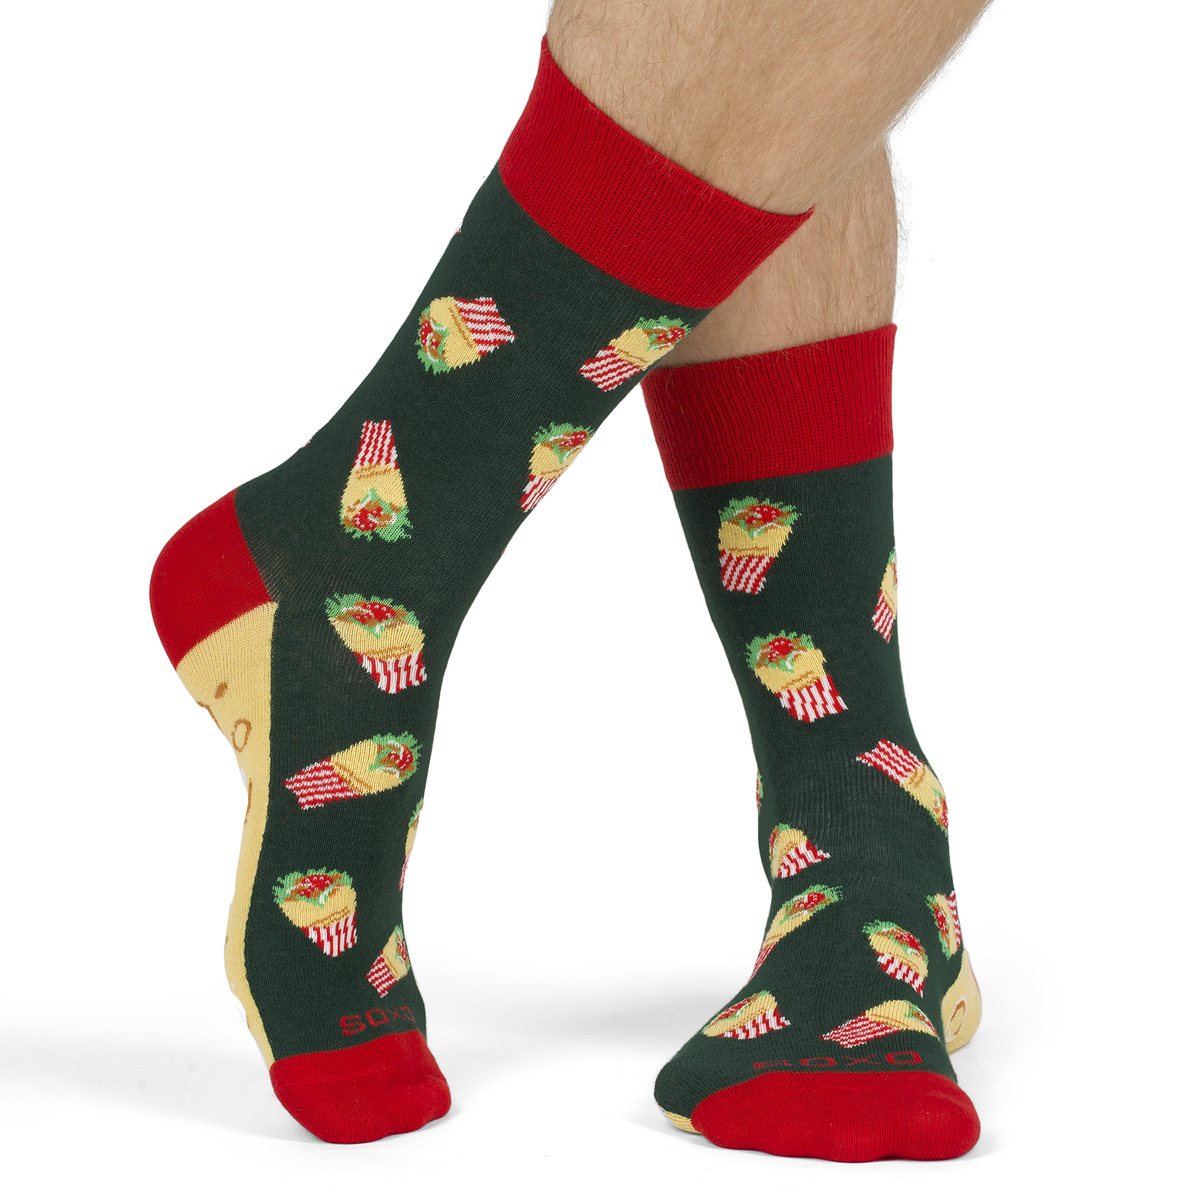 Comprar Happy Socks Barbeque Calcetines Hombre online